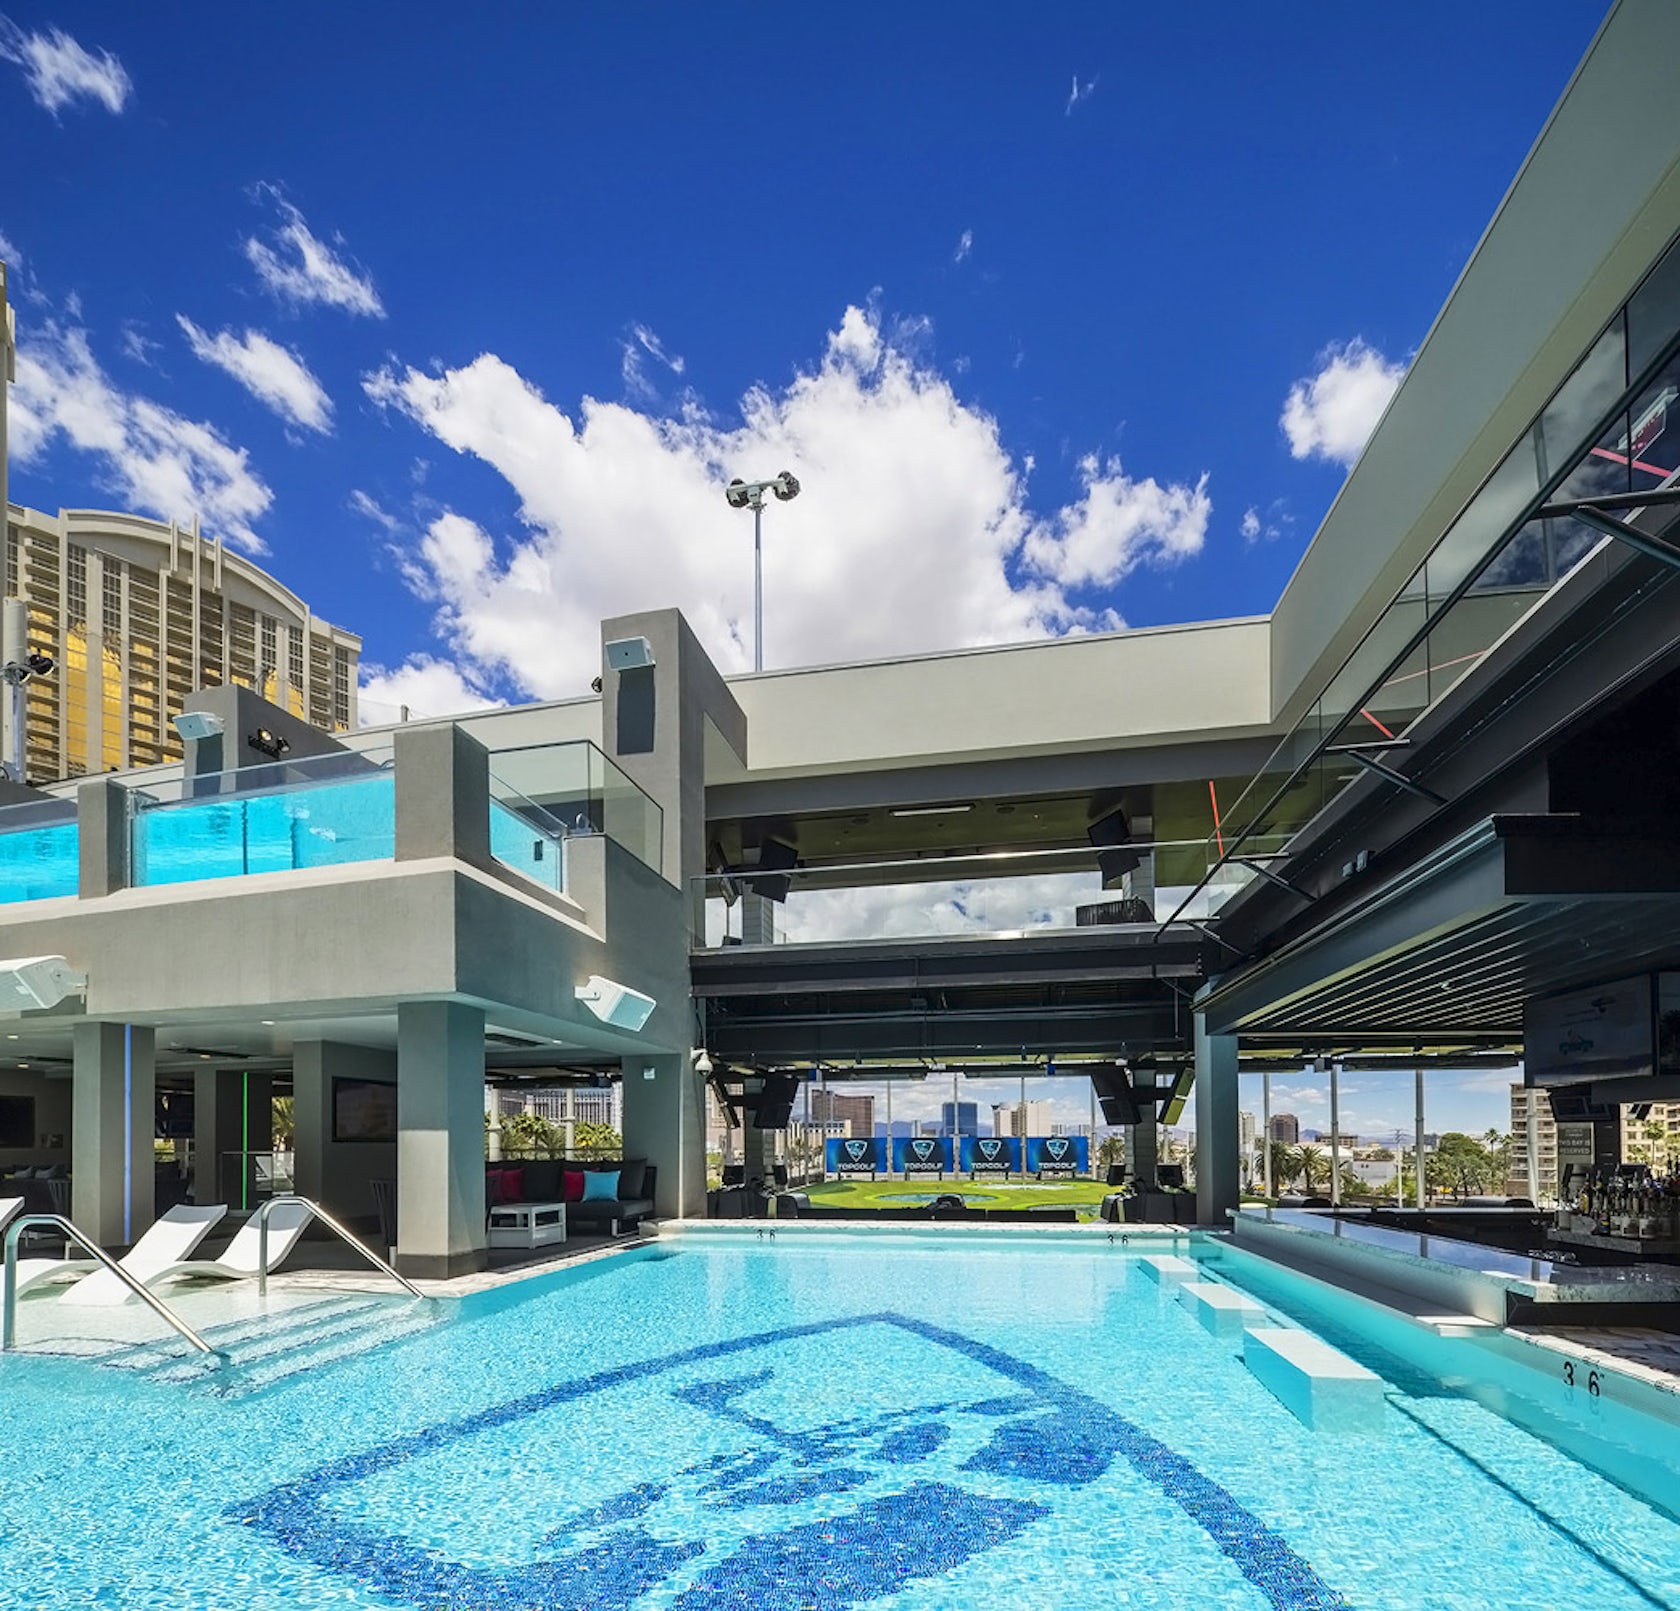 Topgolf Las Vegas by YWS Design & Architecture - Architizer